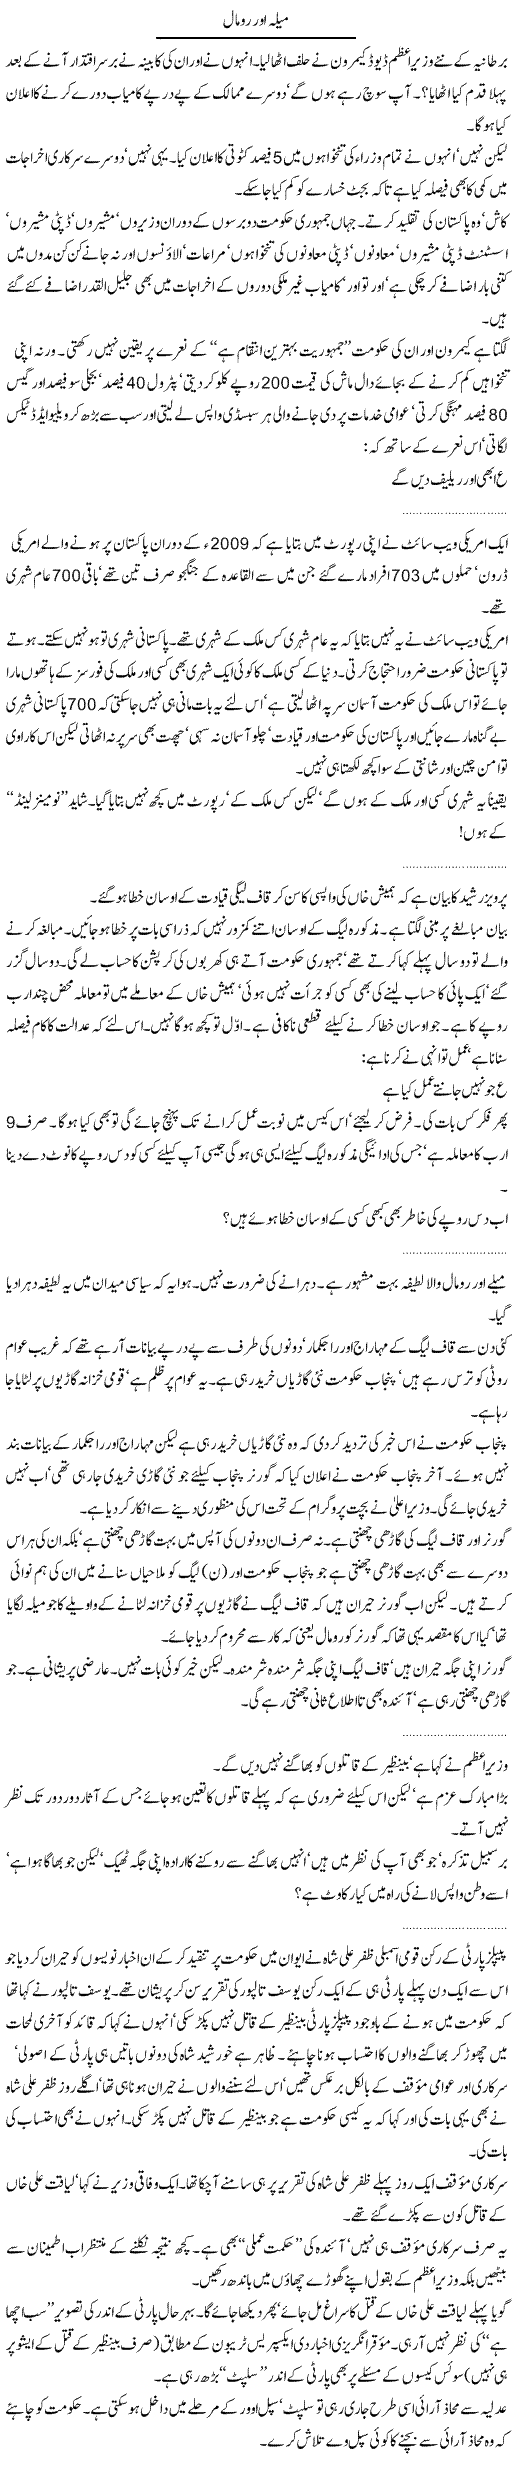 Meela Romal Express Column Abdullah Tariq 15 May 2010